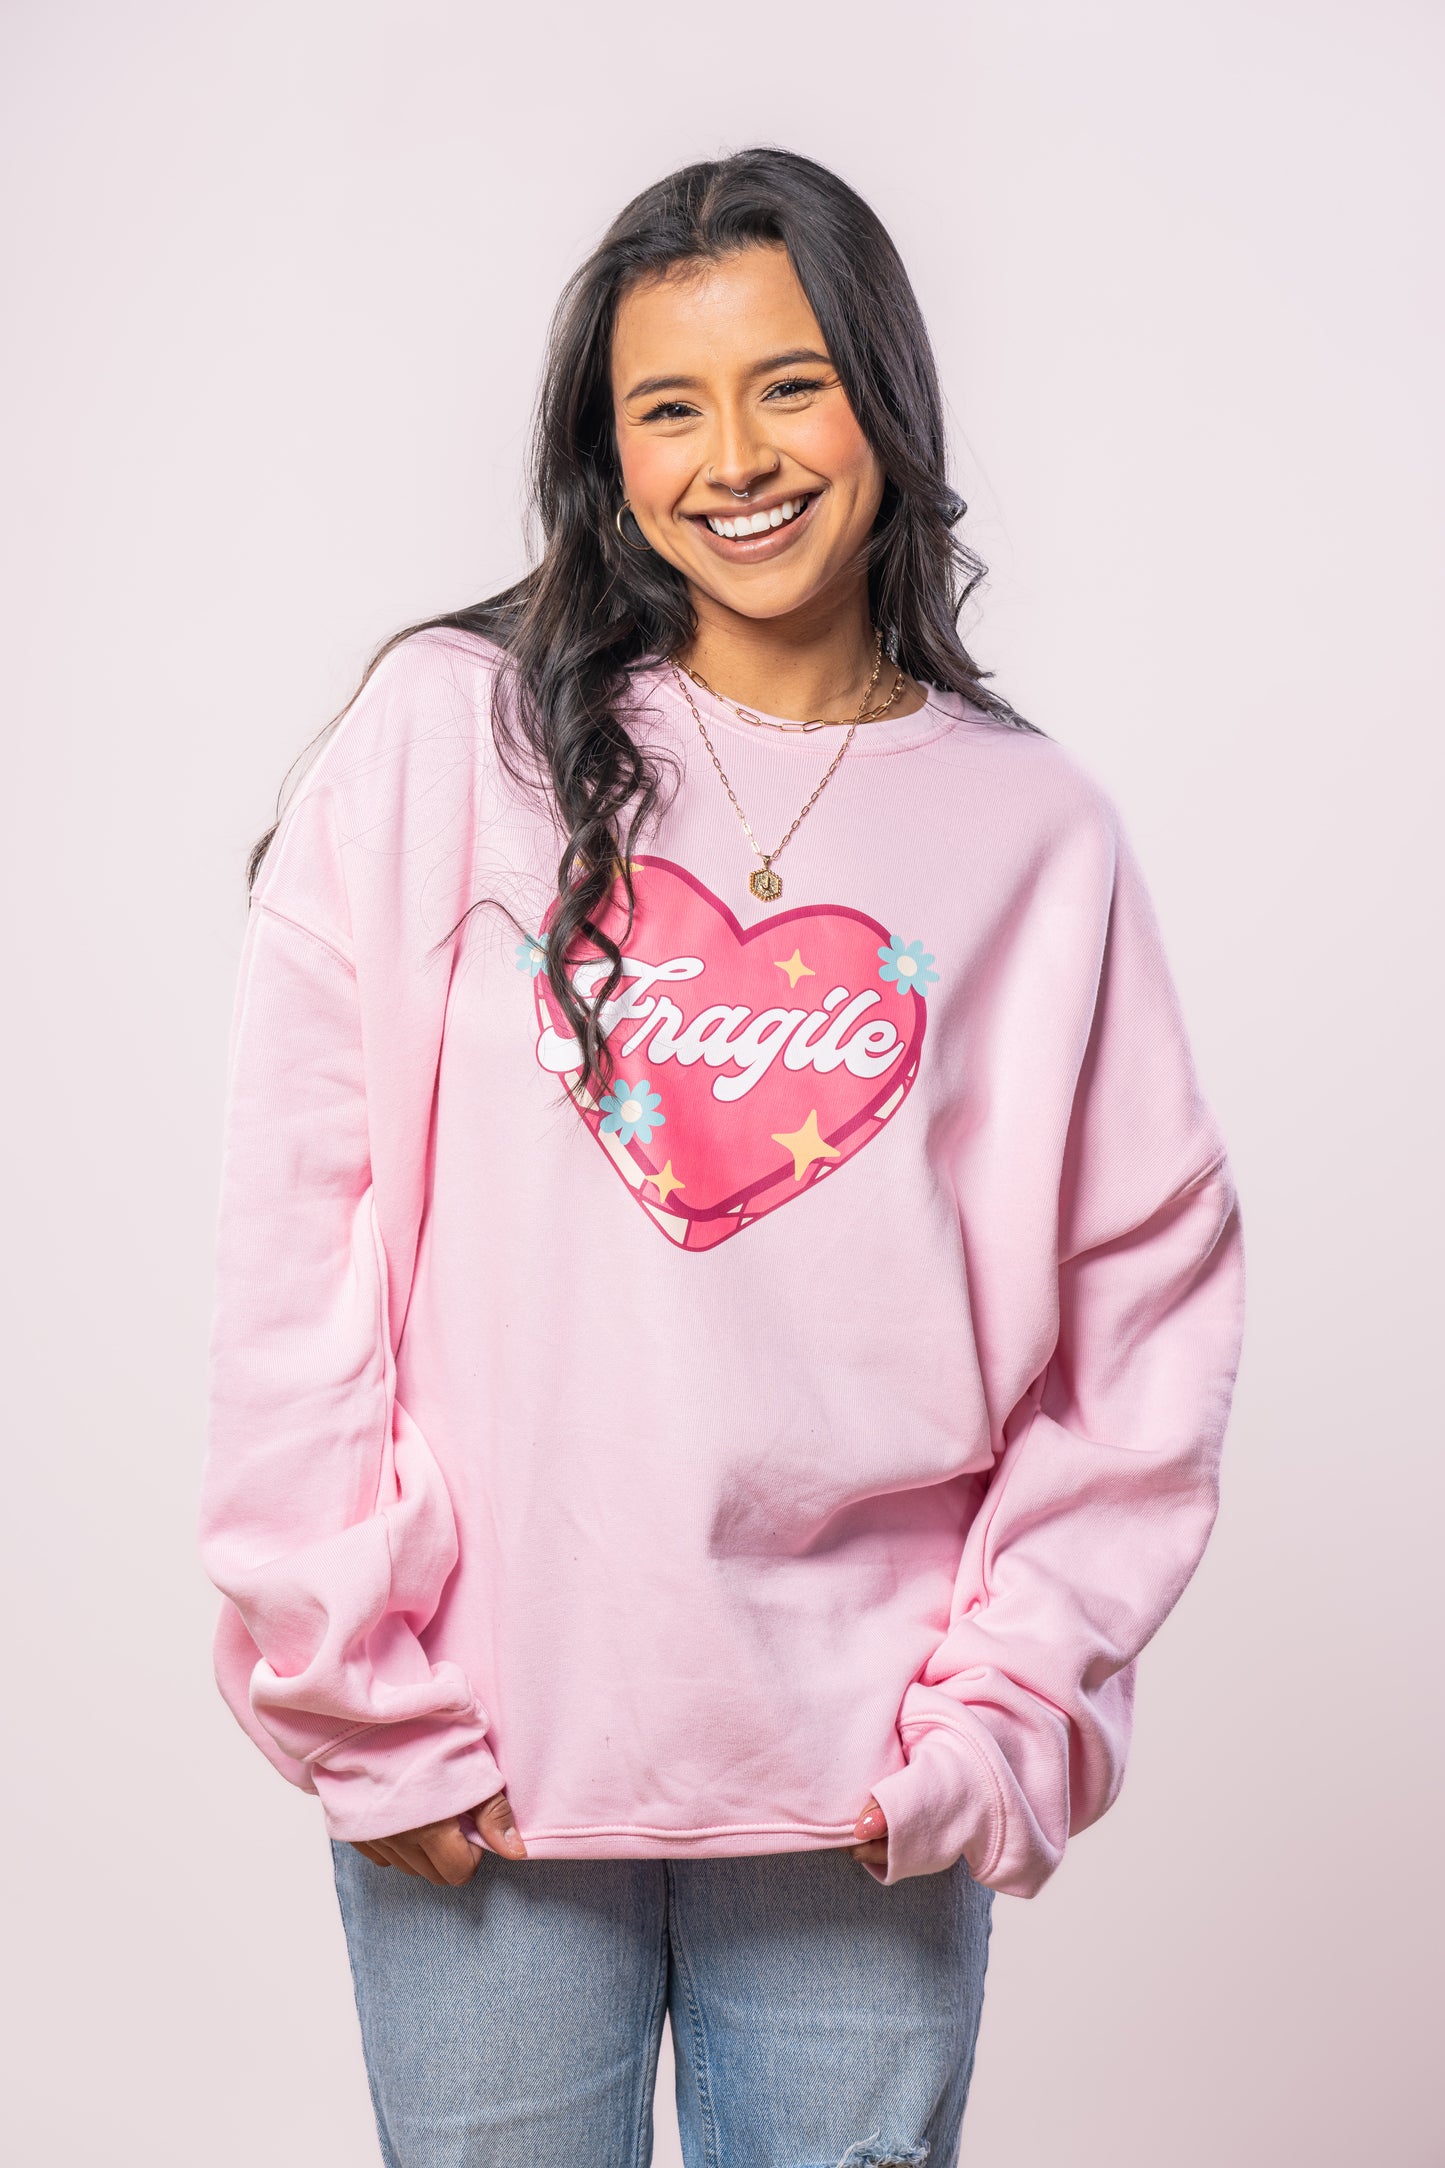 Fragile - Sweatshirt (Light Pink)